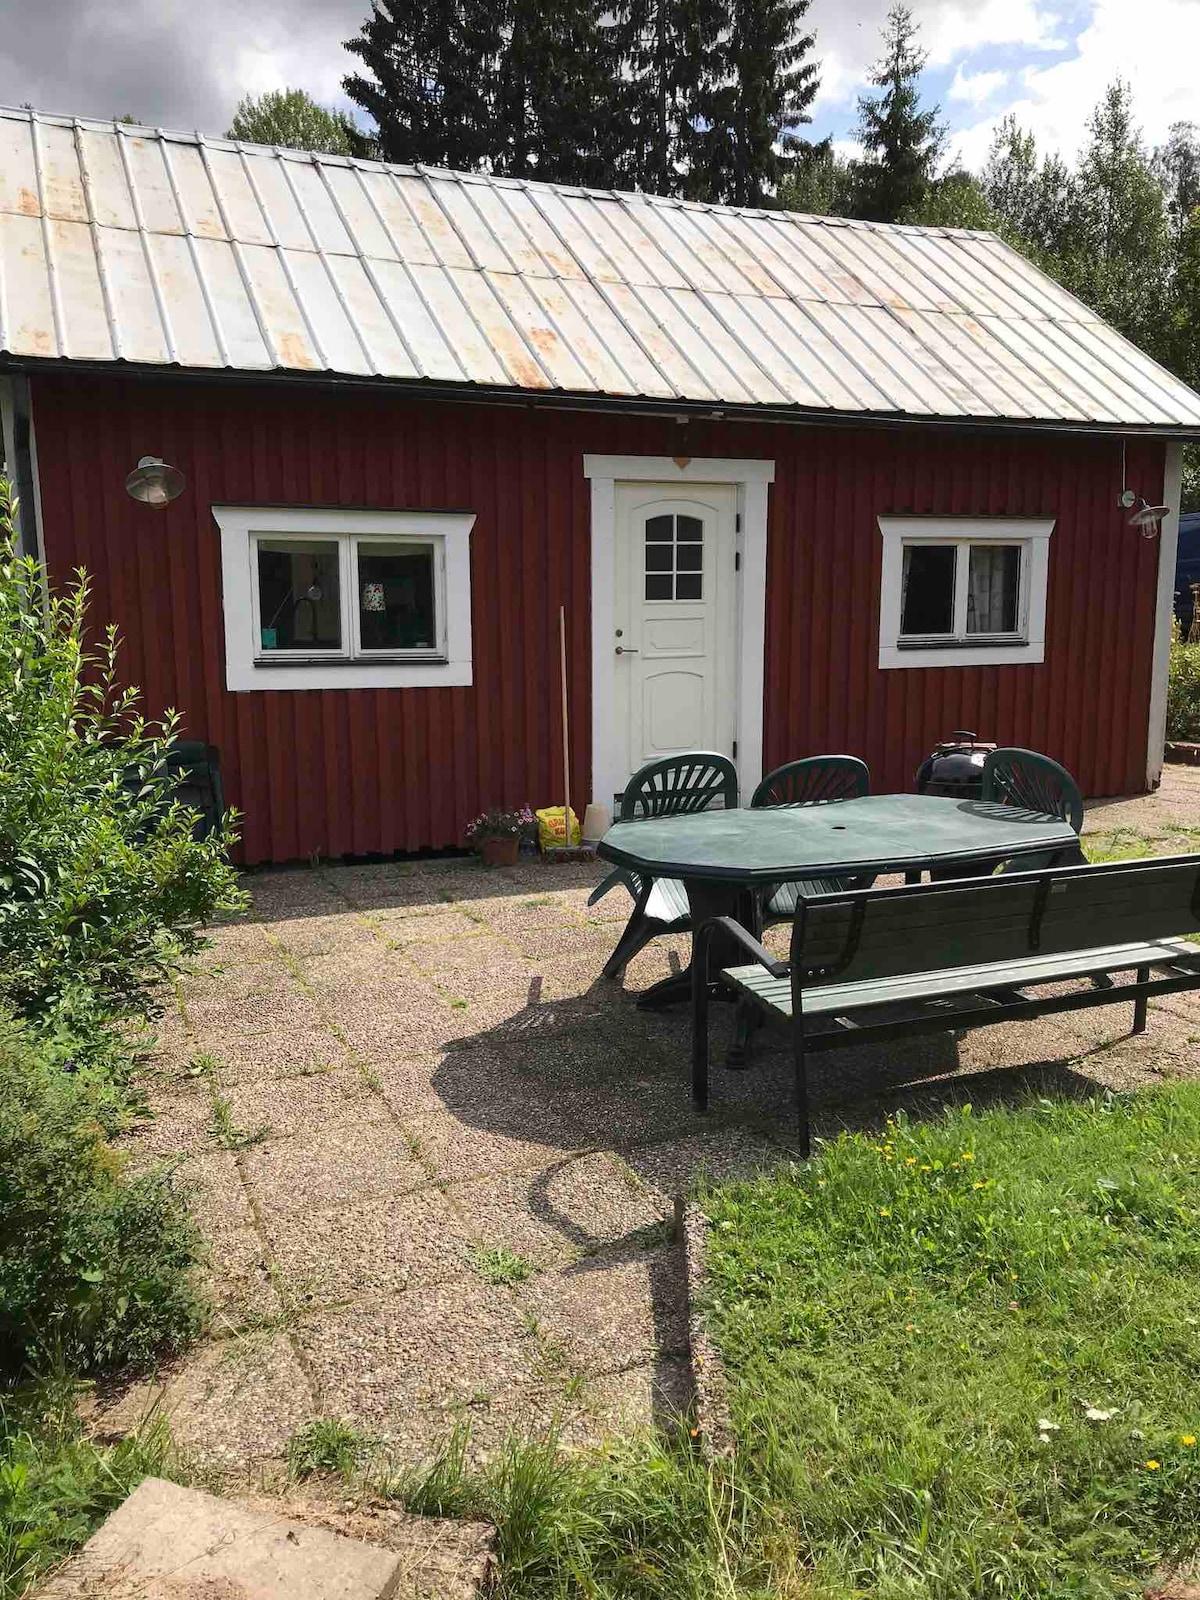 Torsåker （ Hofors ）的温馨小屋